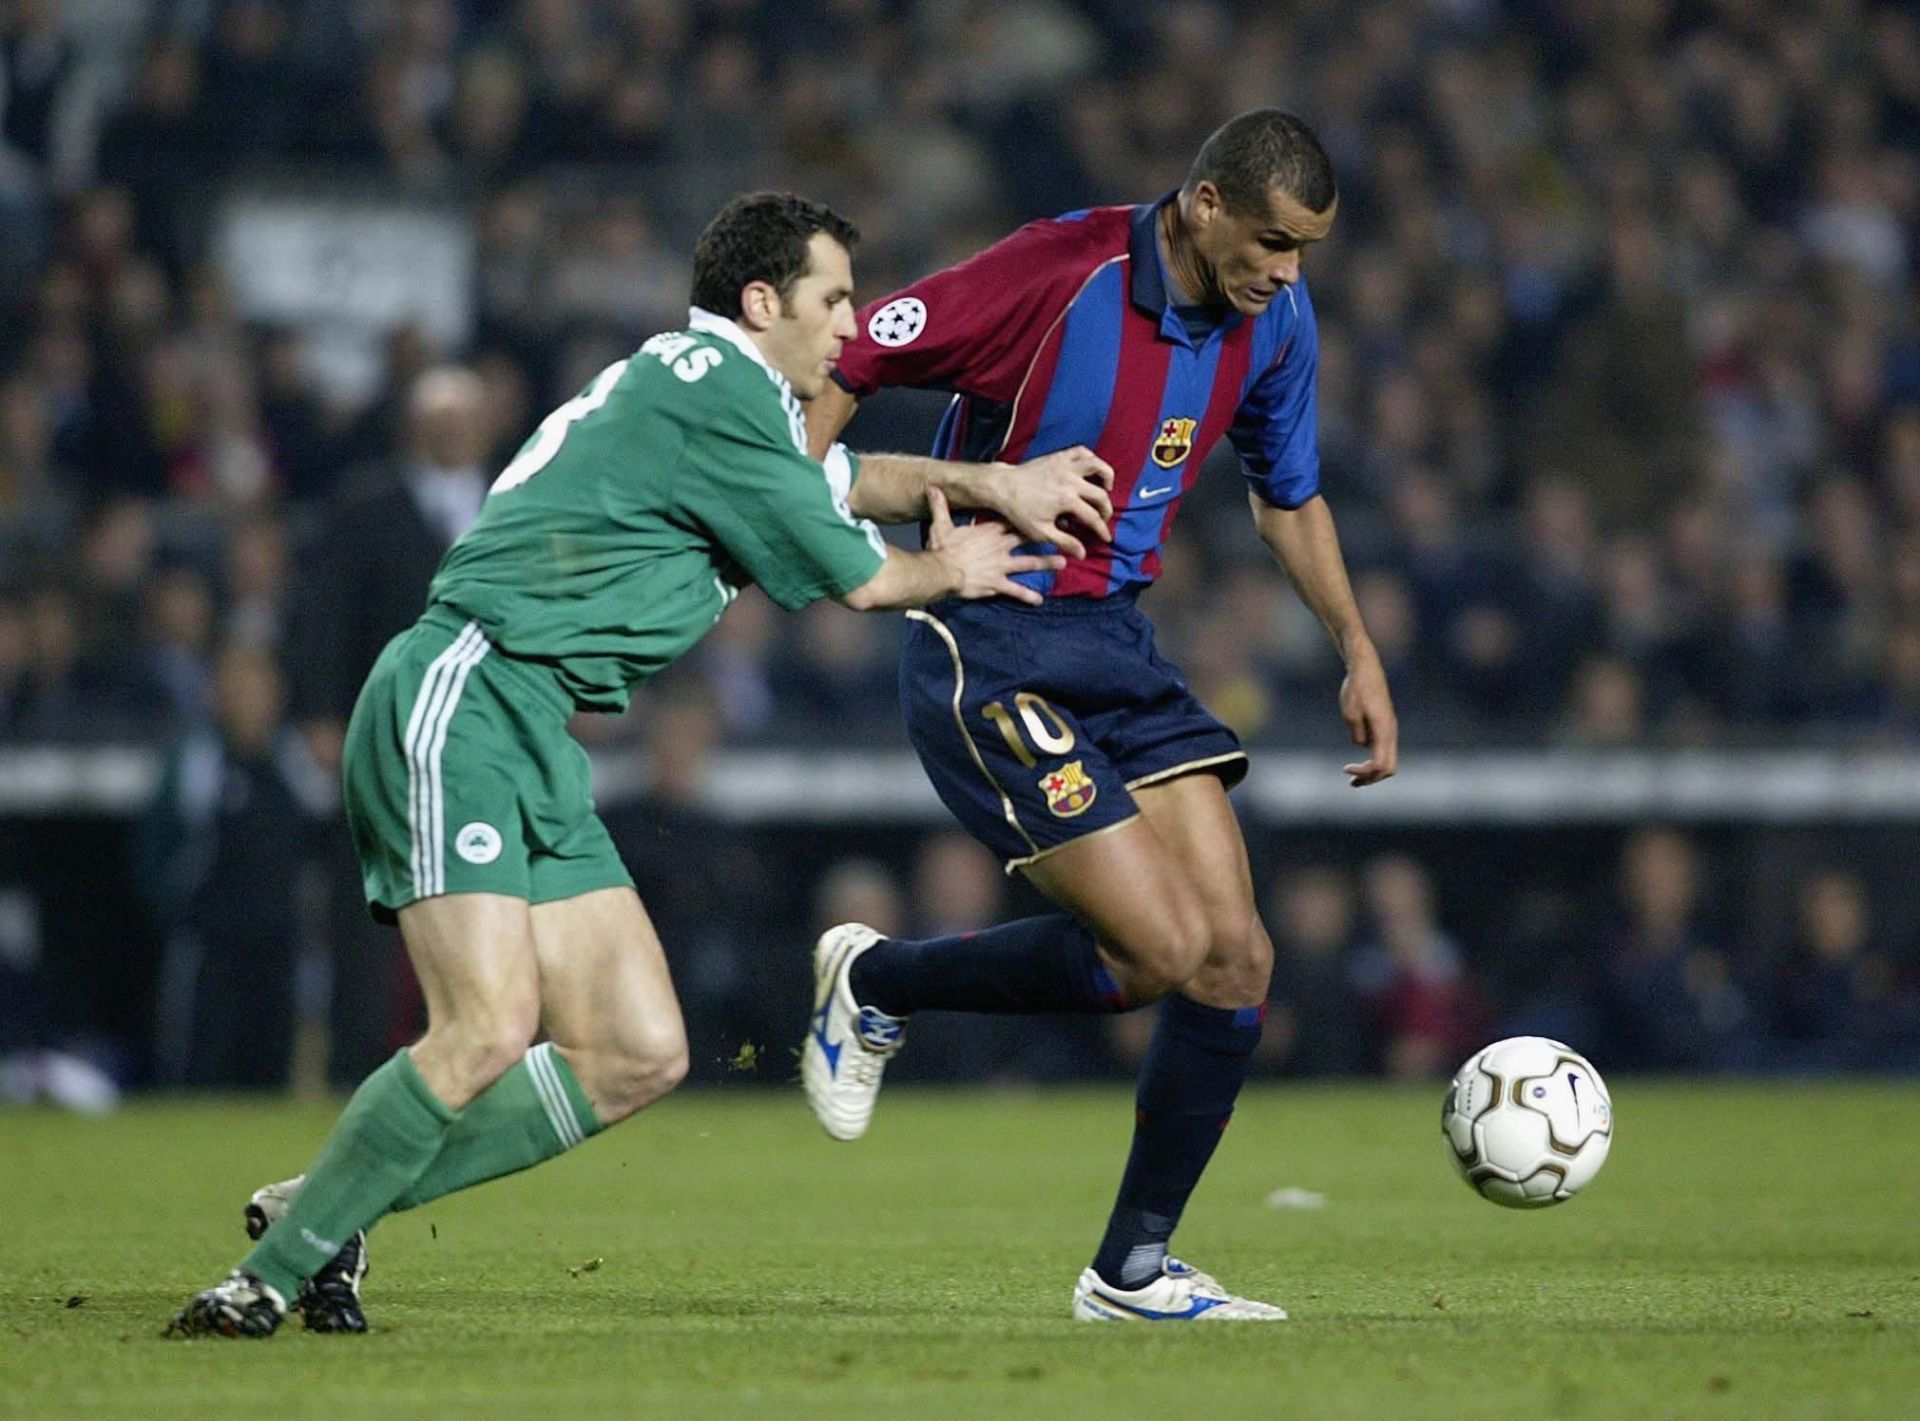 Rivaldo scored 22 goals for Barcelona in UCL